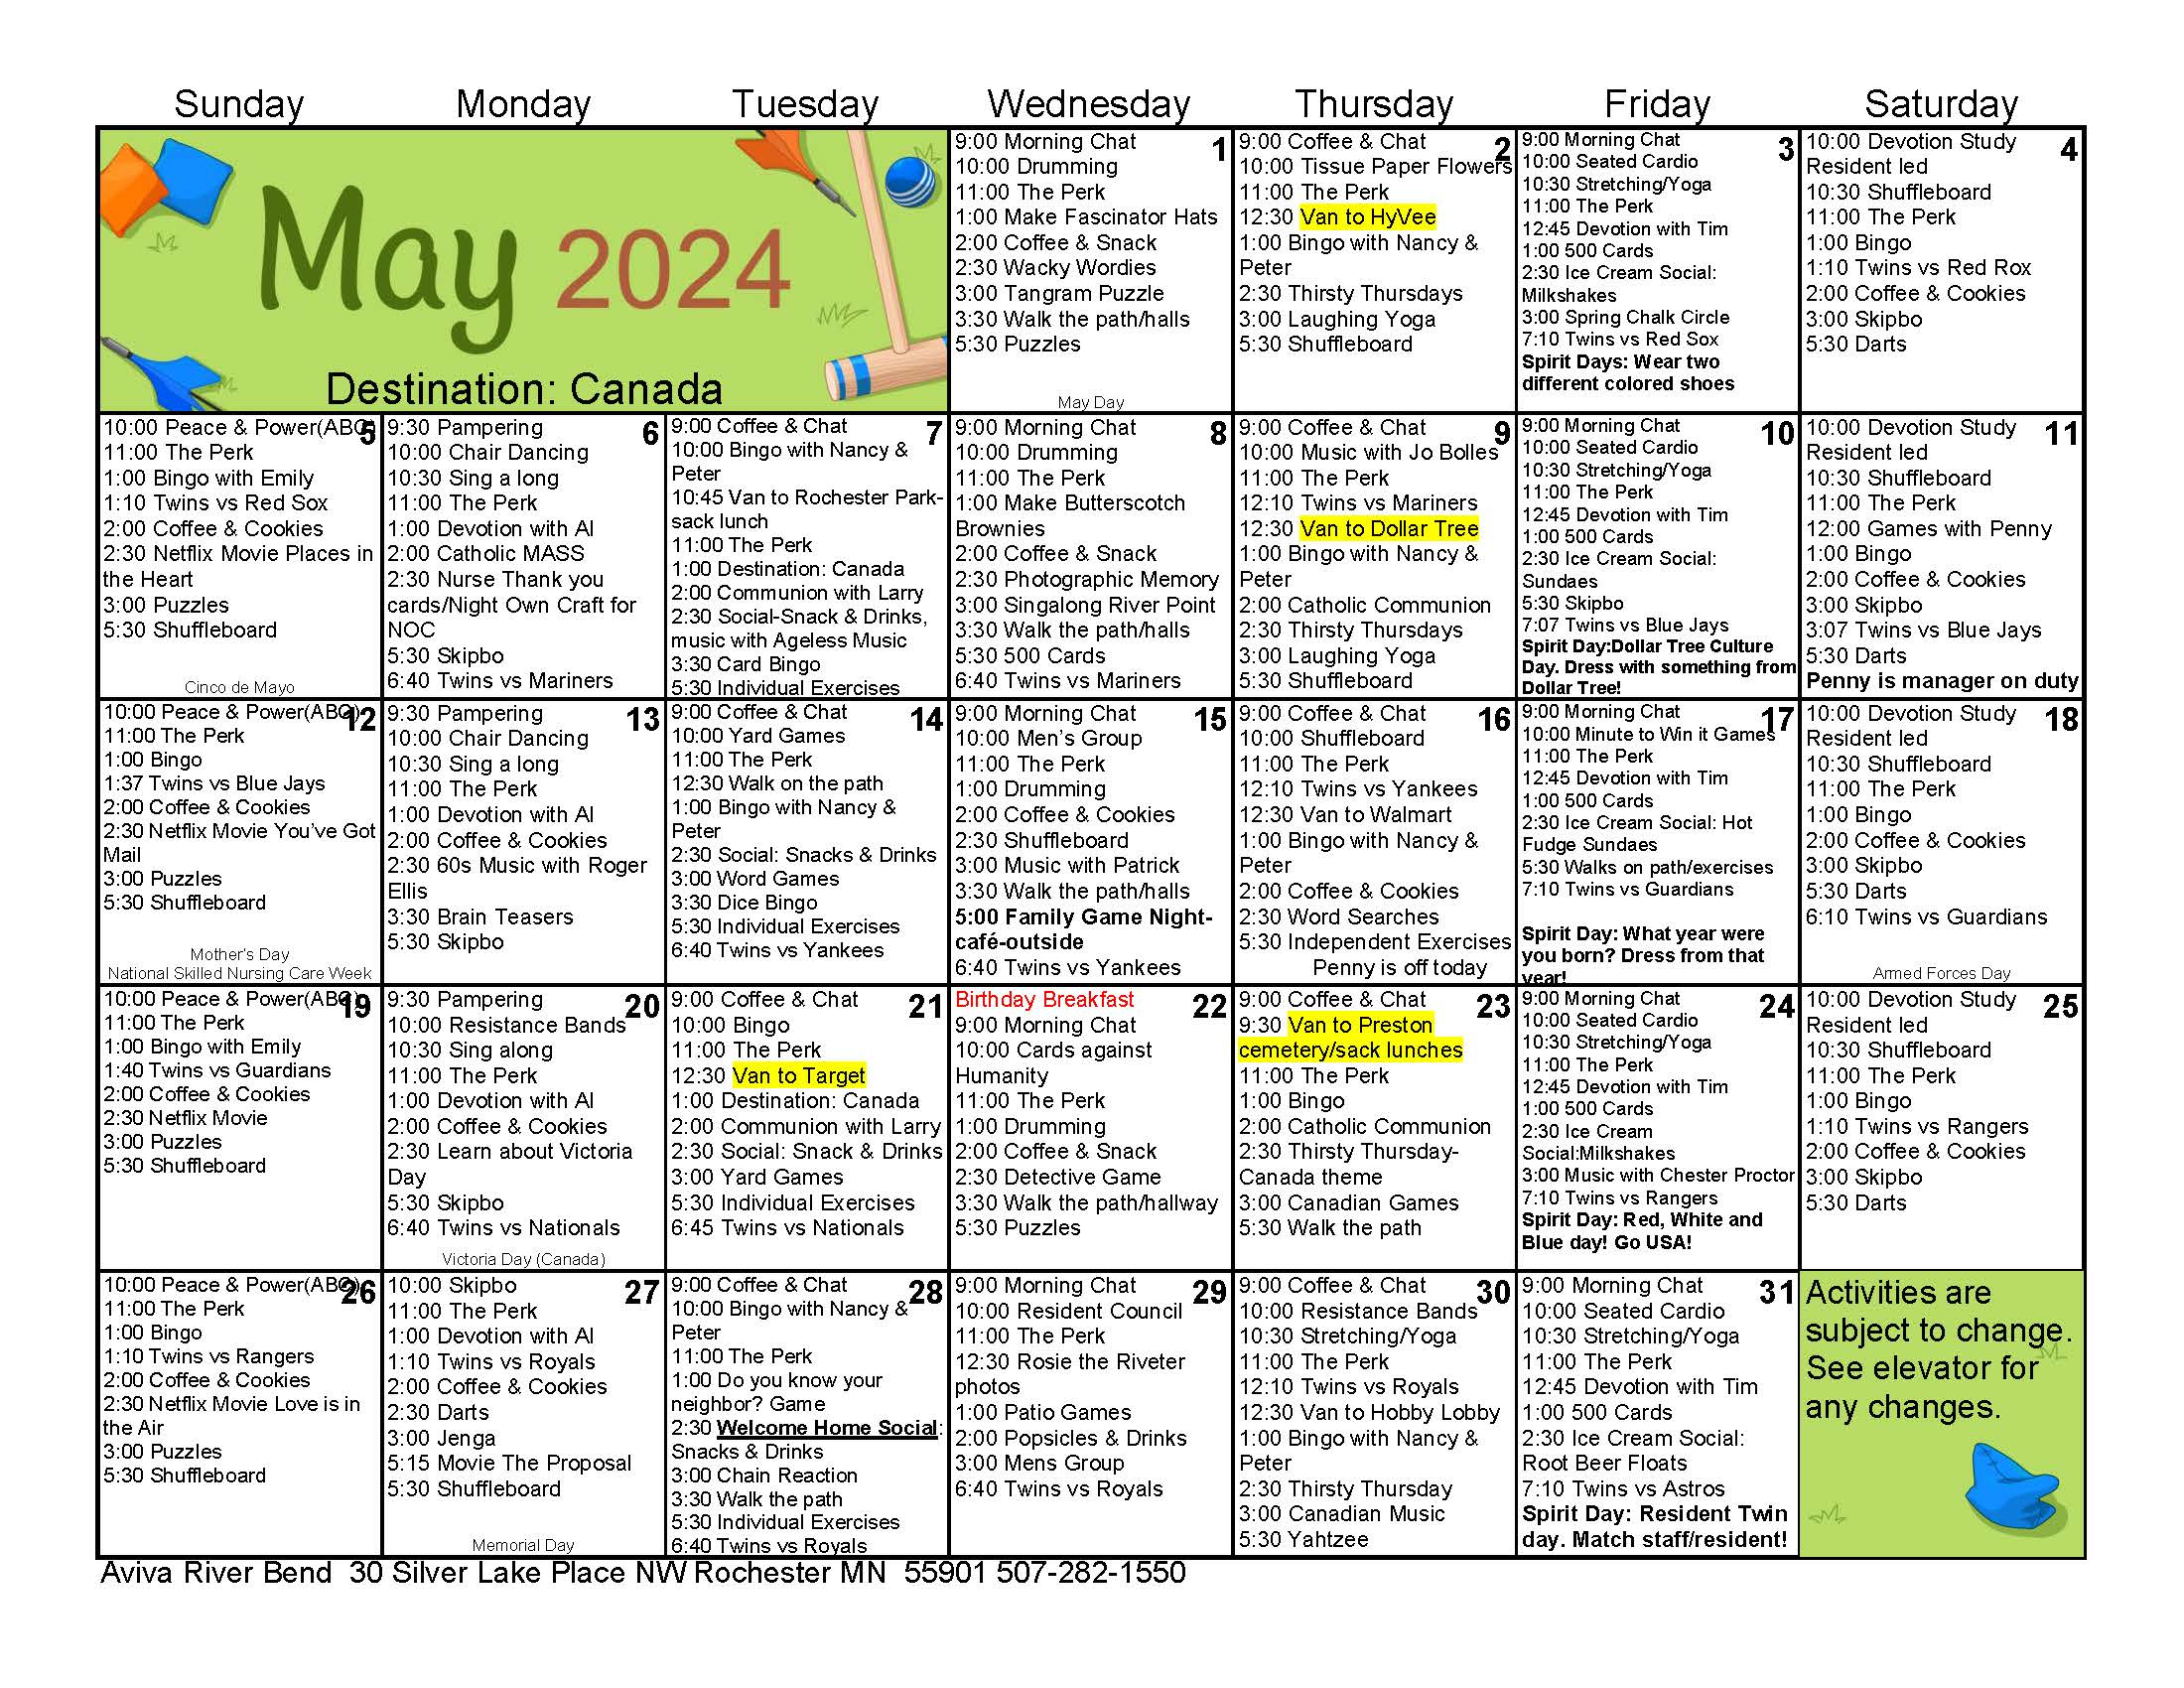 Aviva River Bend Assisted Living May 2024 Event Calendar